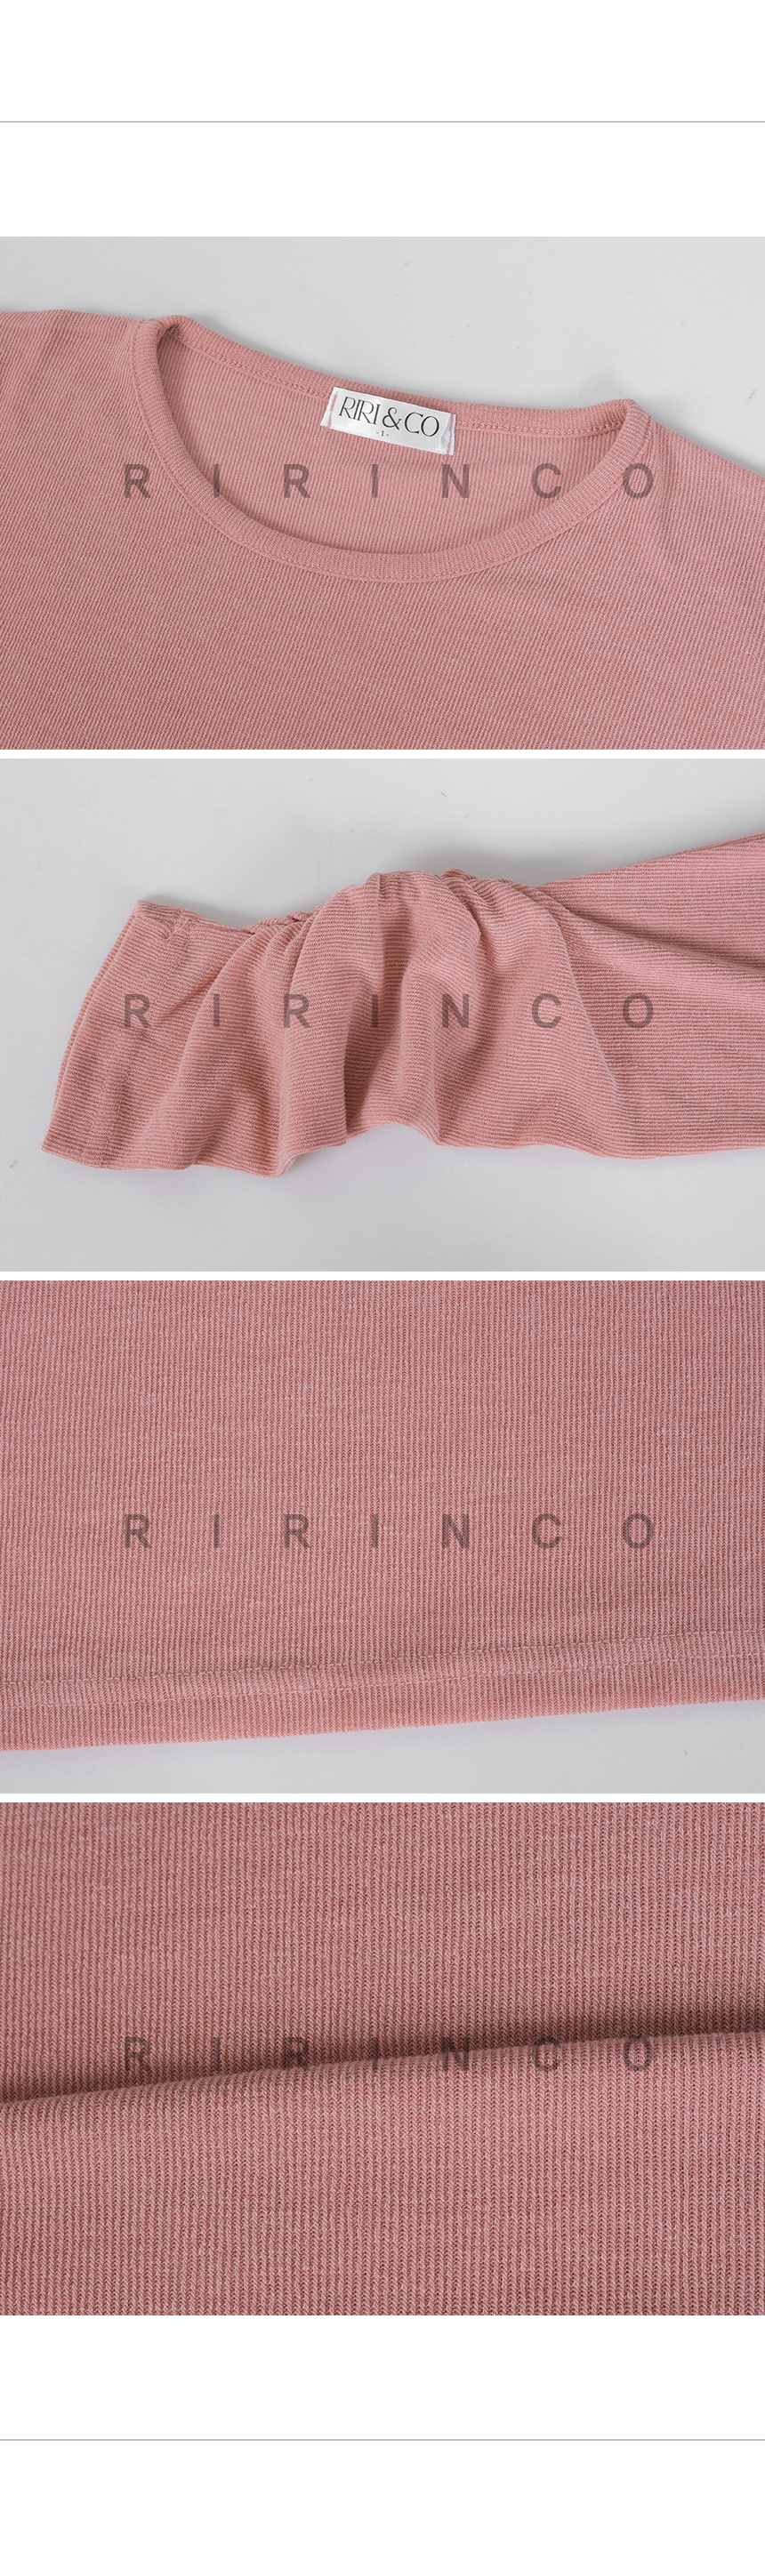 RIRINCO シャーリングラウンドネックベーシックTシャツ